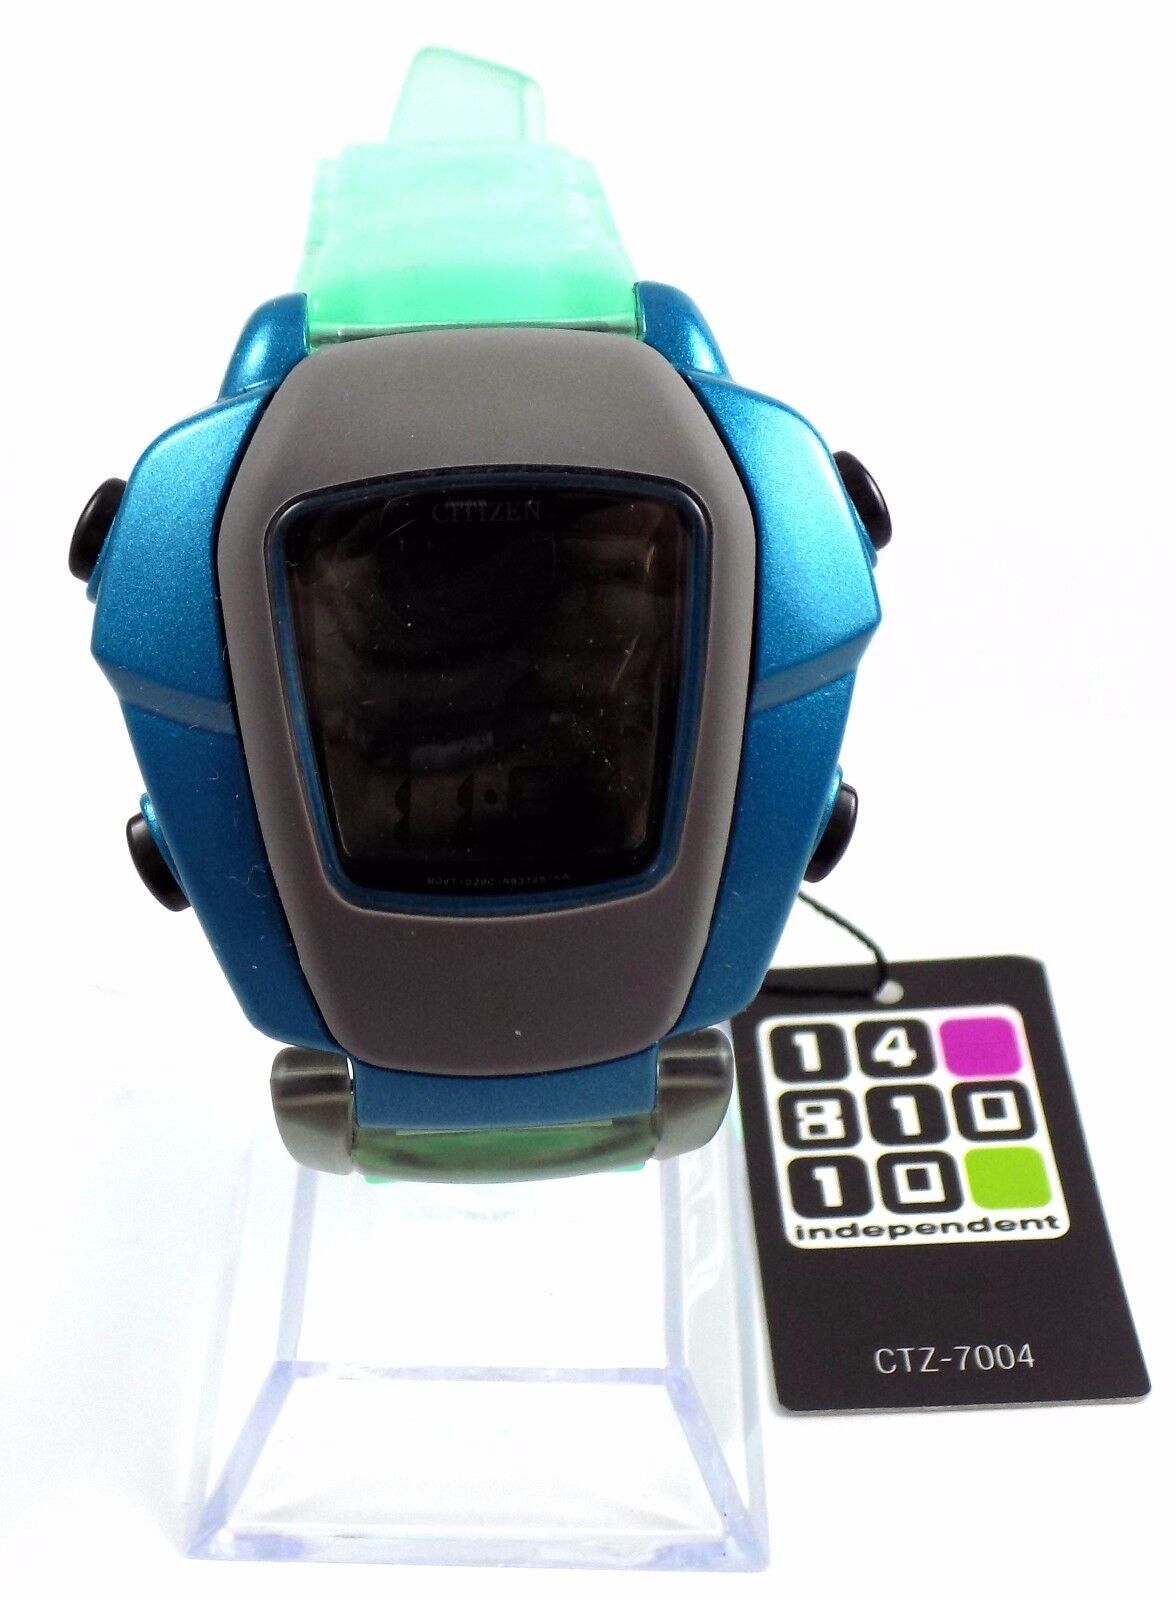 2-CITIZEN INDEPENDENT Digital Watch CTZ-7004 Aqua Green Blue Quirky Retro 90s NOS-Does not apply-IKSpecs